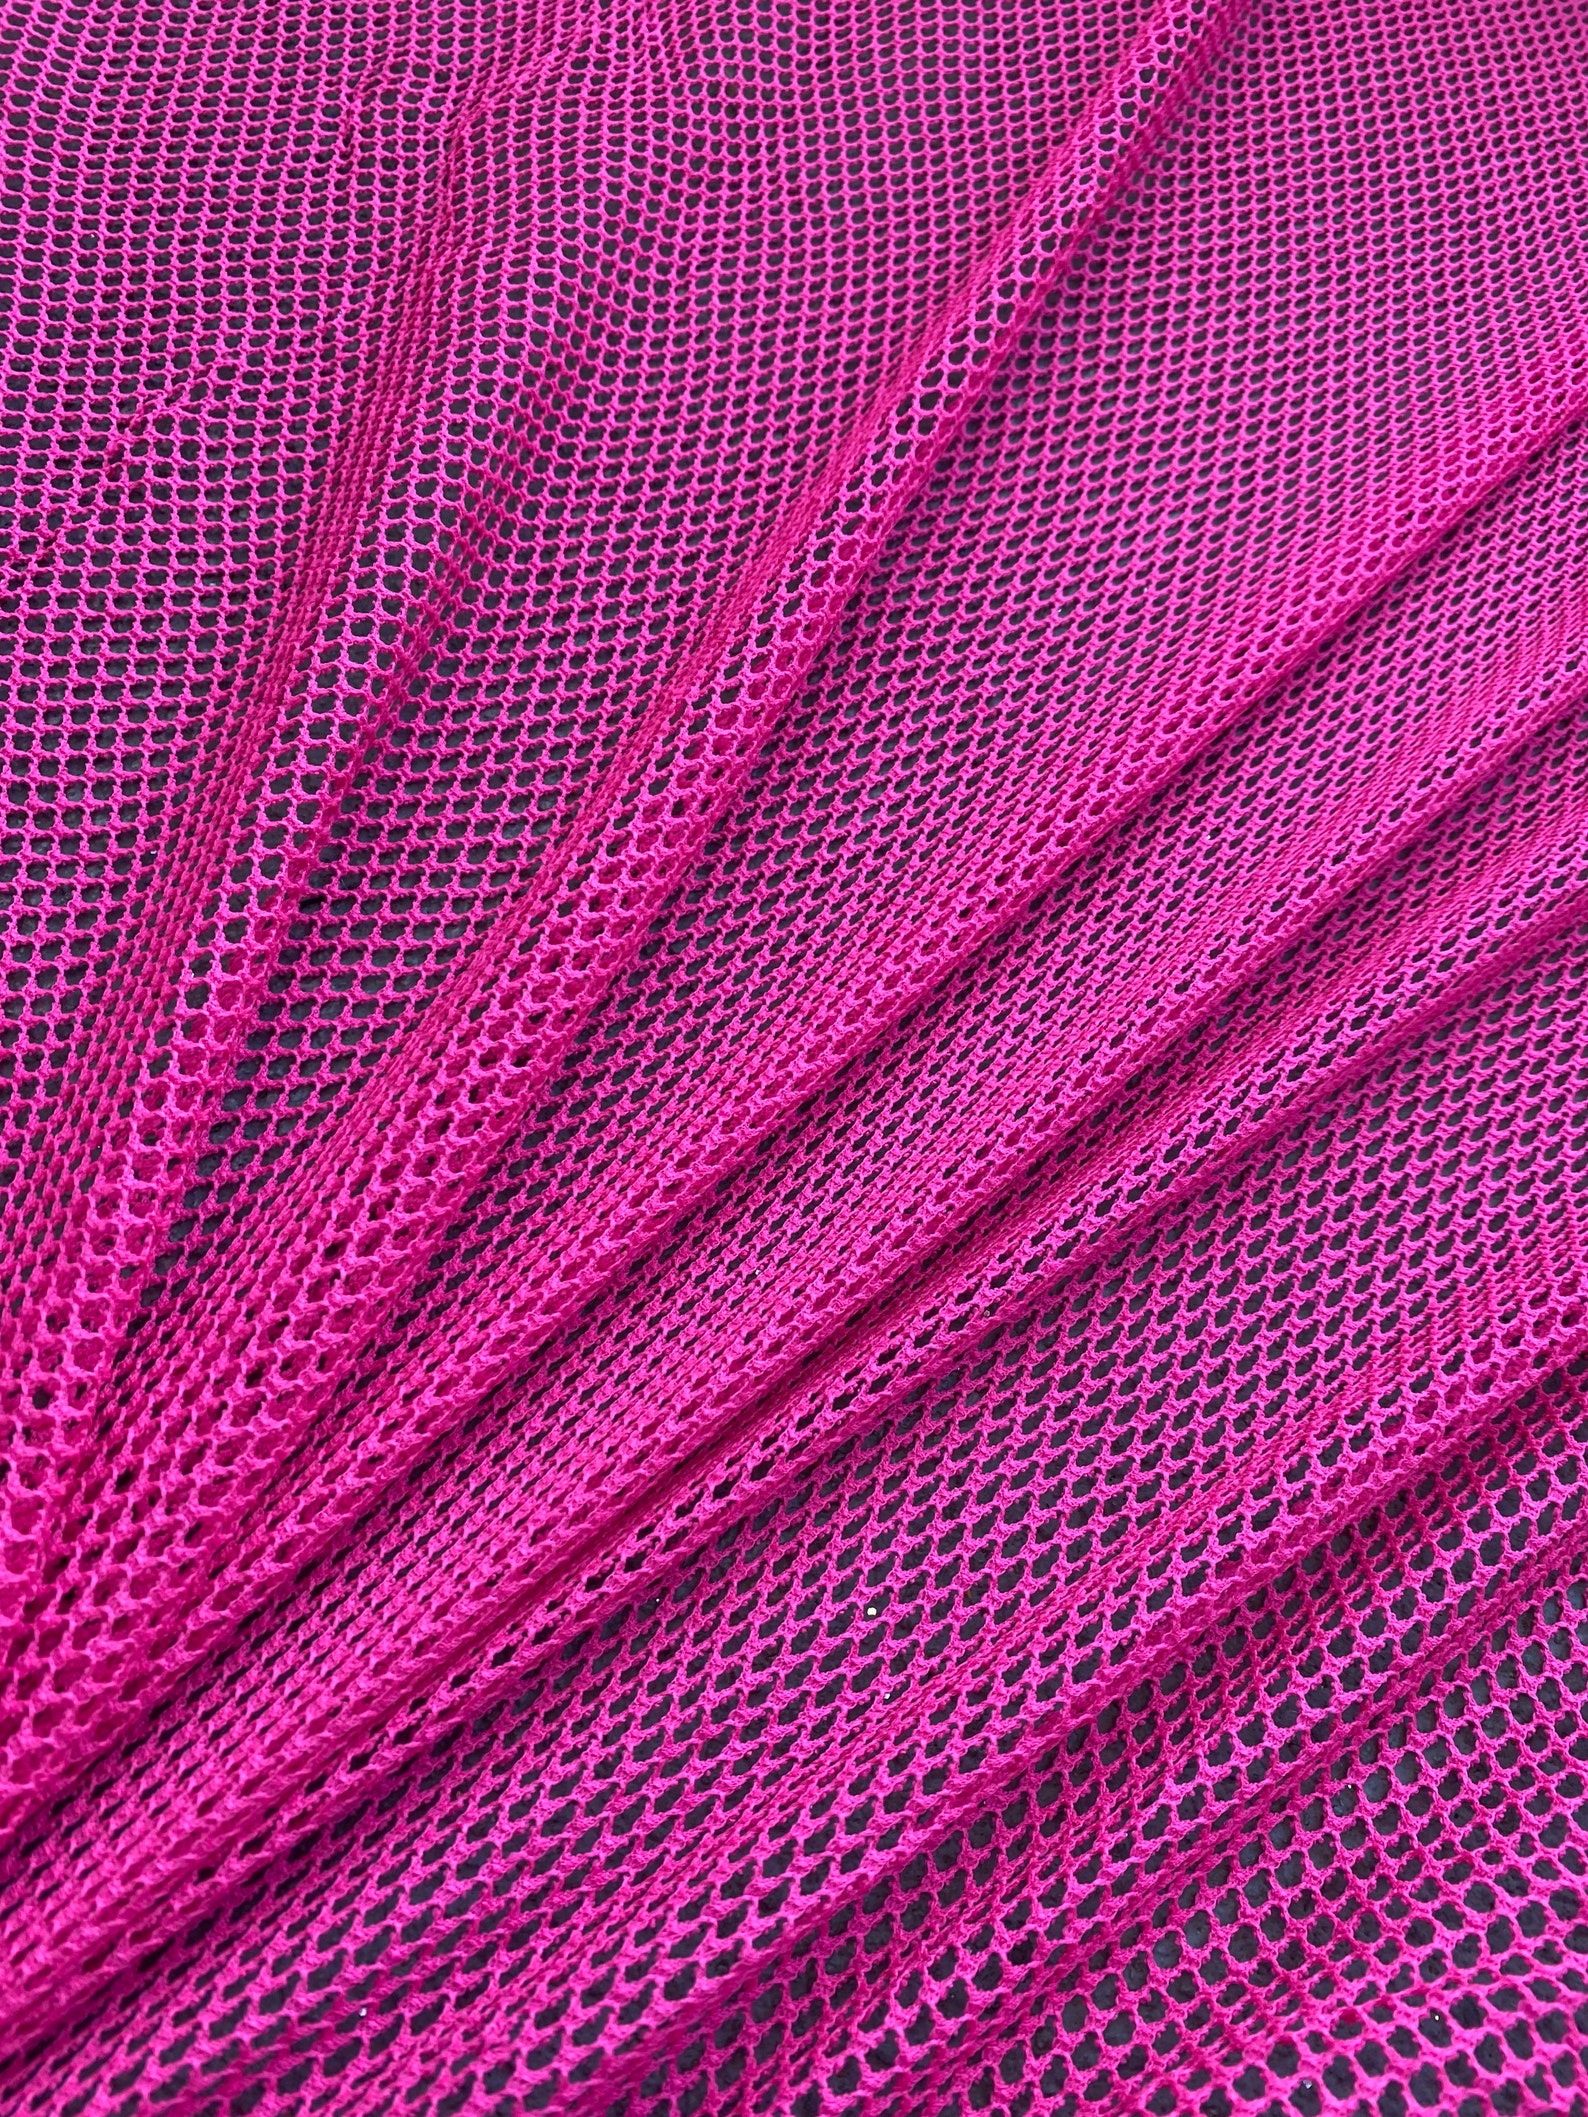 BEST PRICE Hot Pink Fish Net Mesh Fabric Nylon Spandex - Etsy